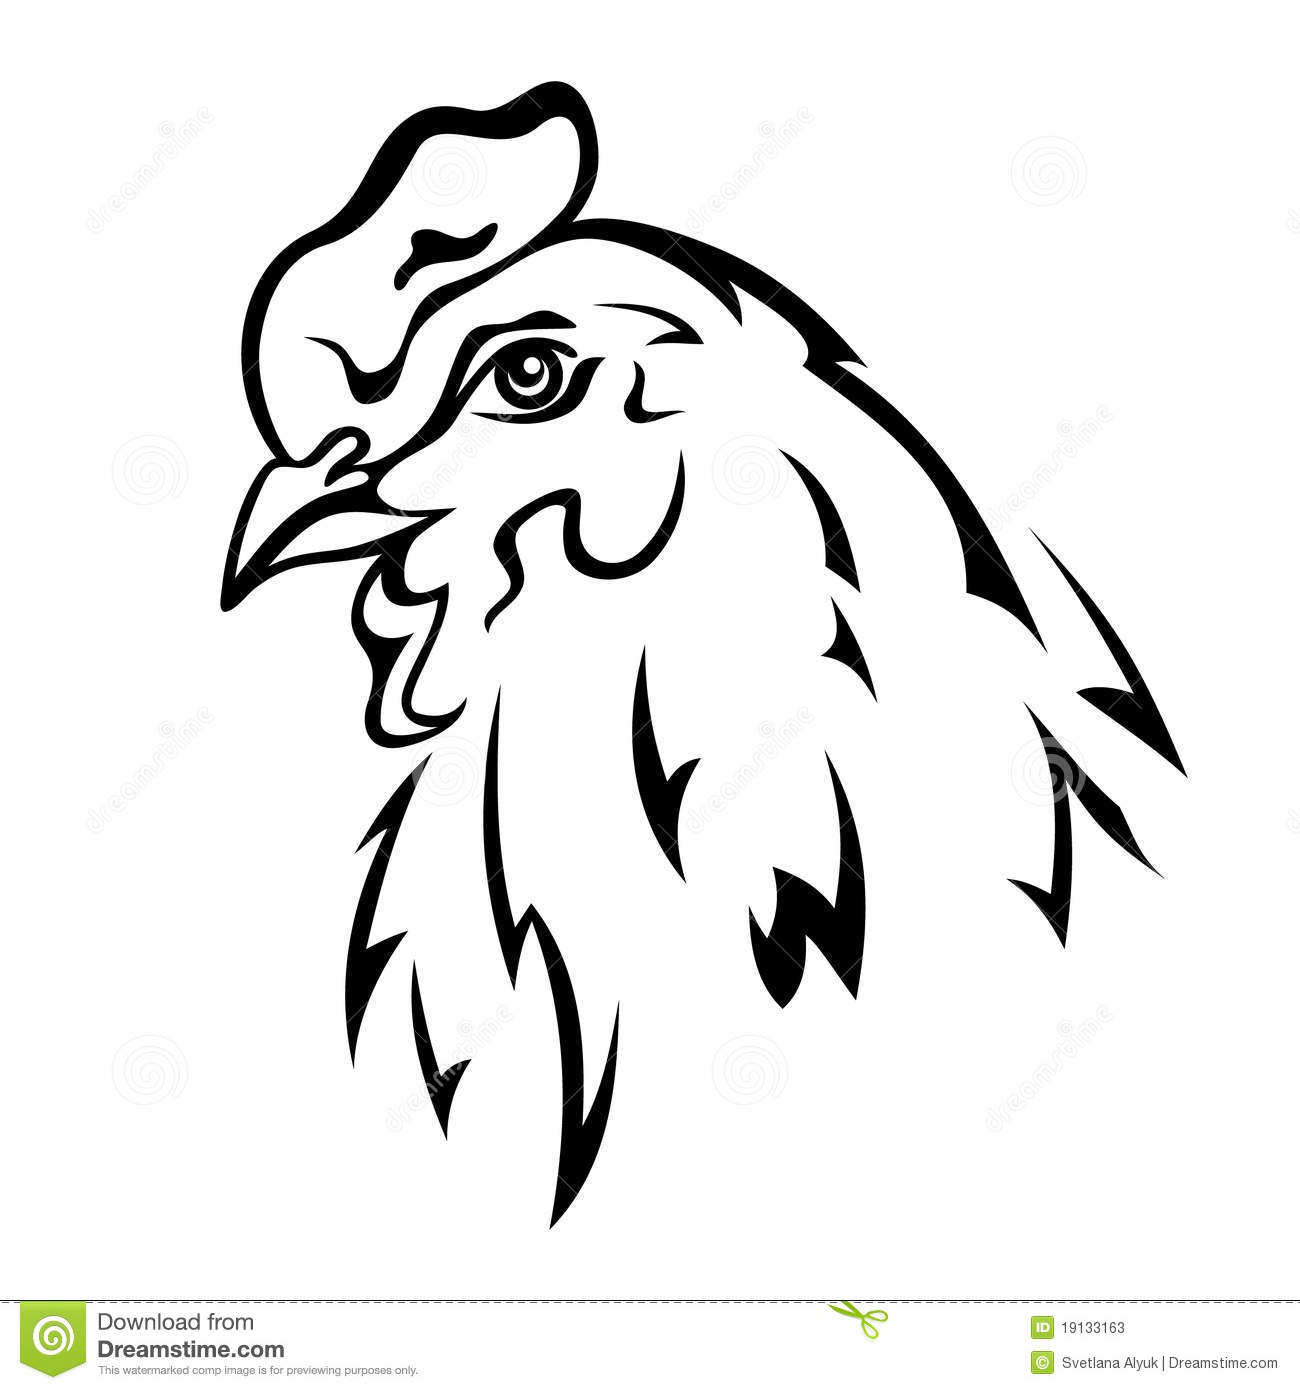 Chicken Head Black And White Illustration